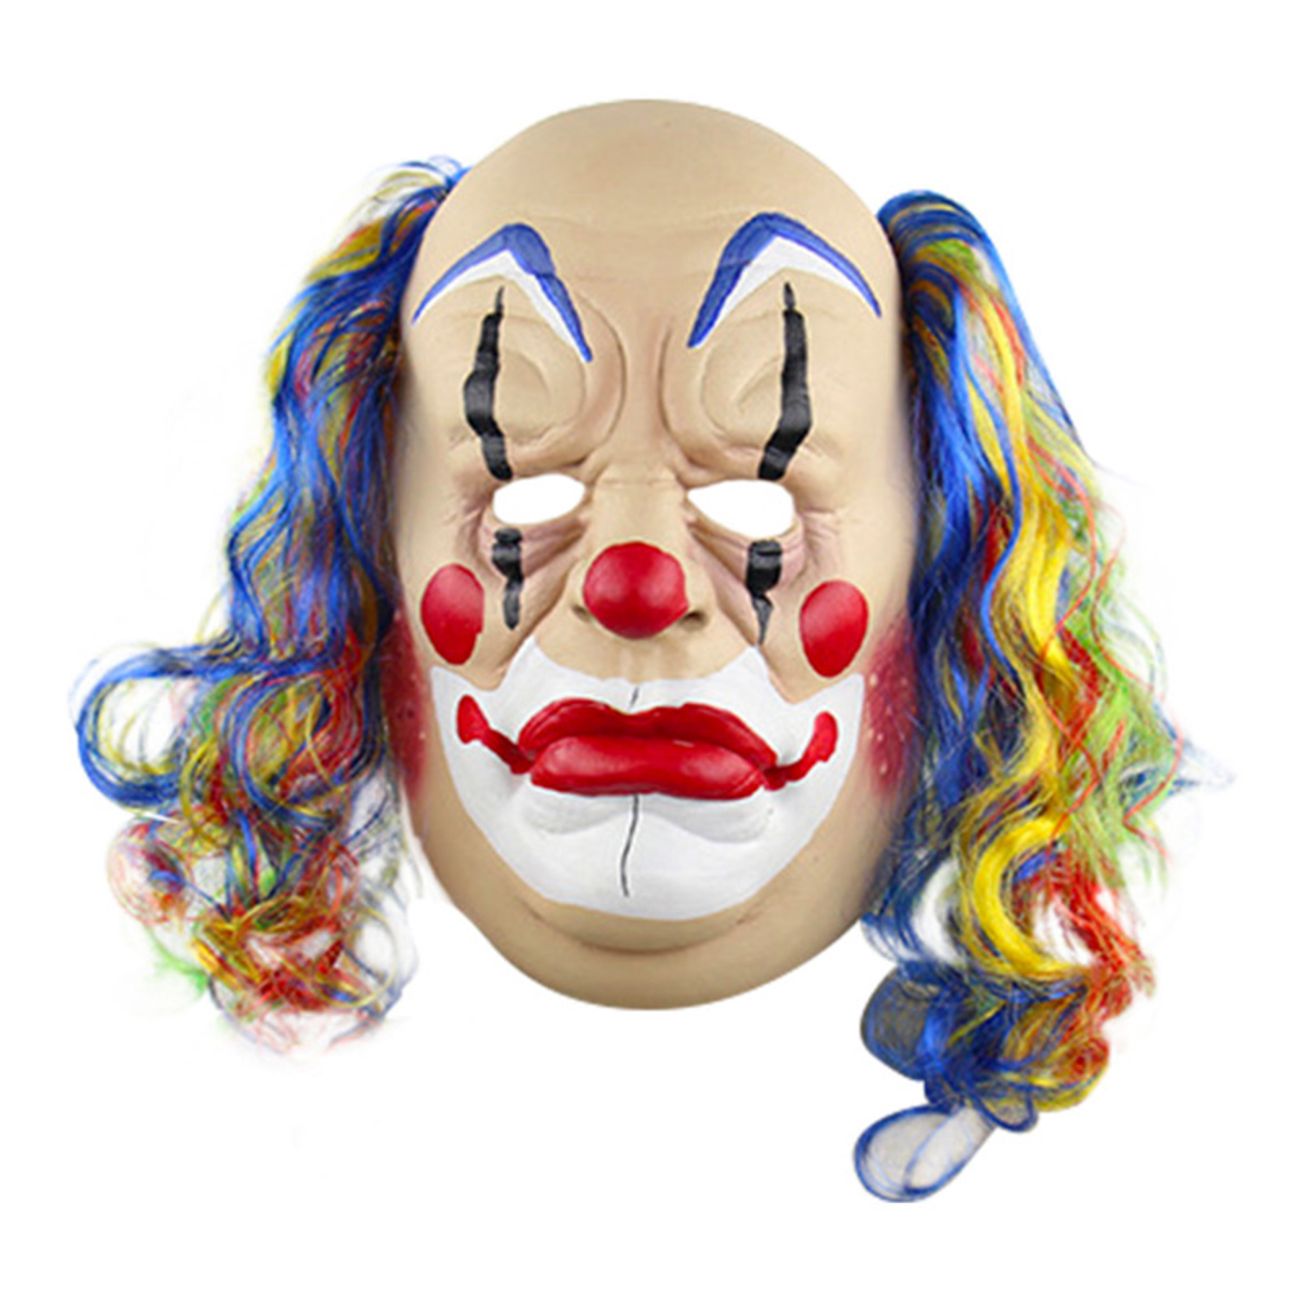 clown-mask-gordo-1